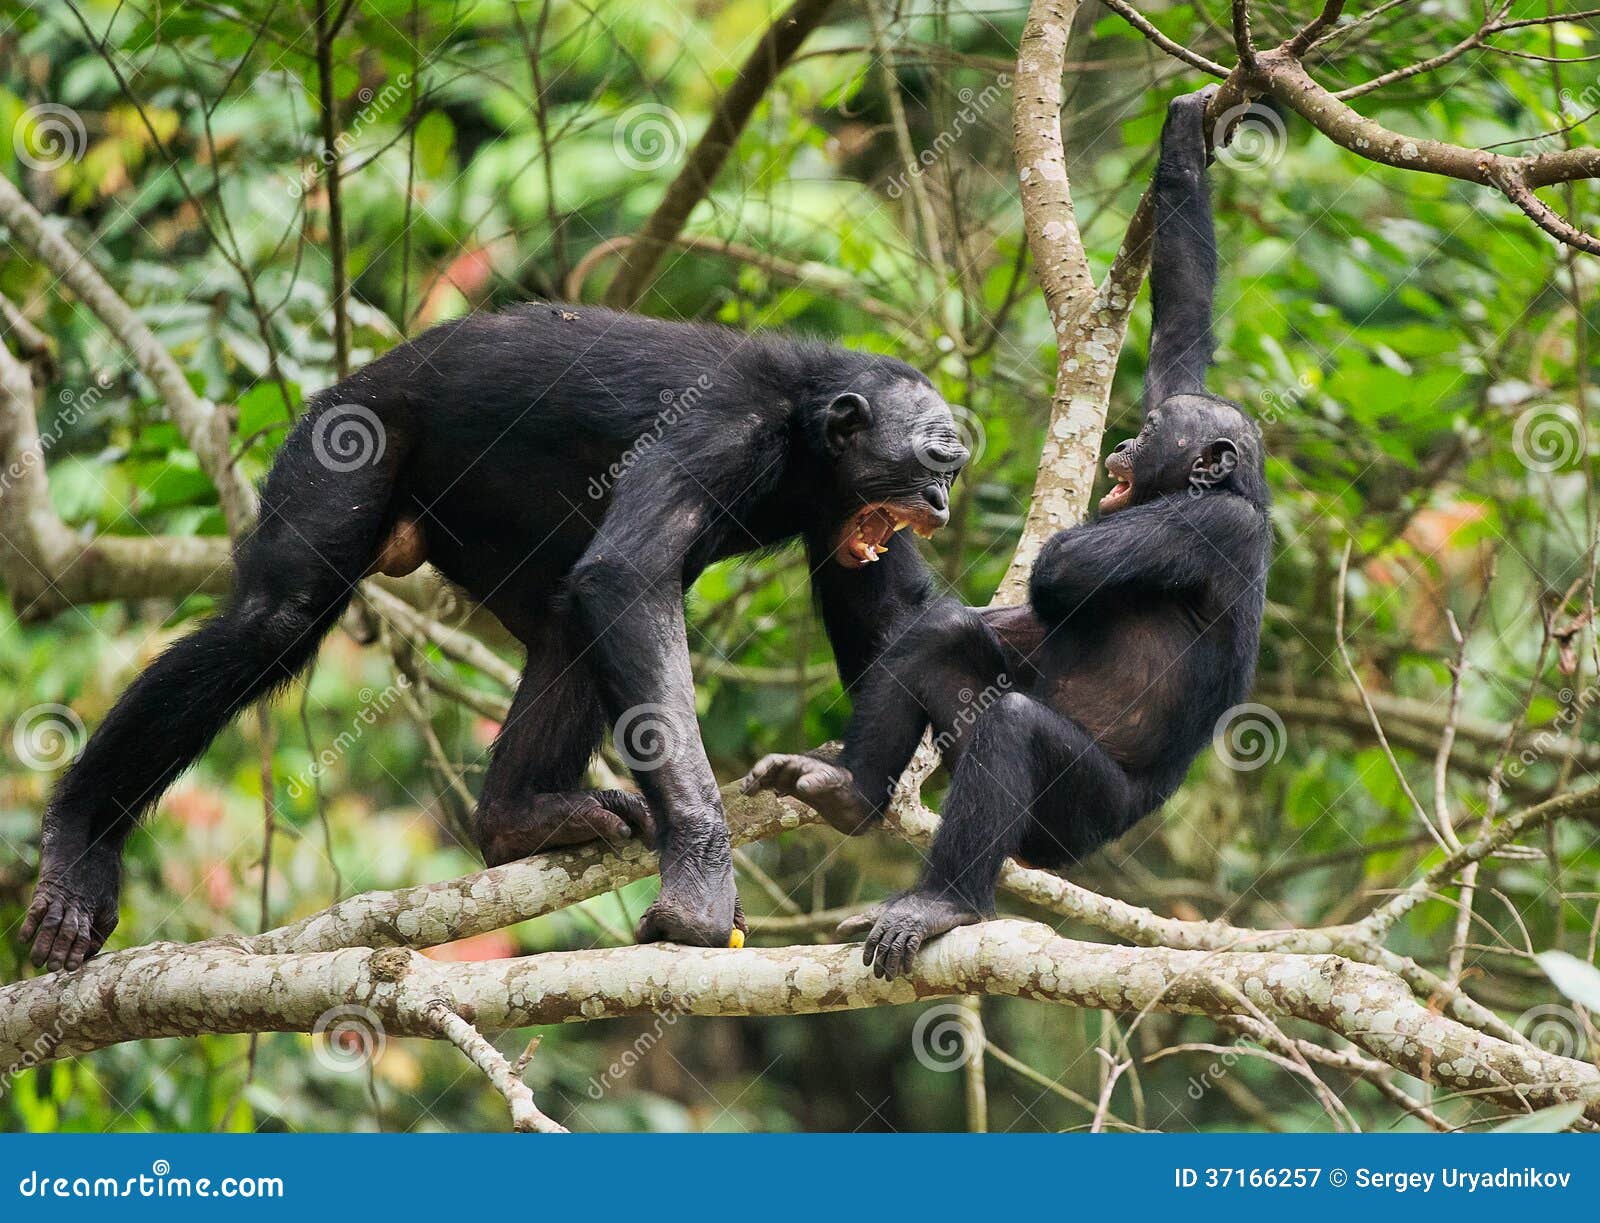 the swearing and aggressive bonobo ( pan paniscus),